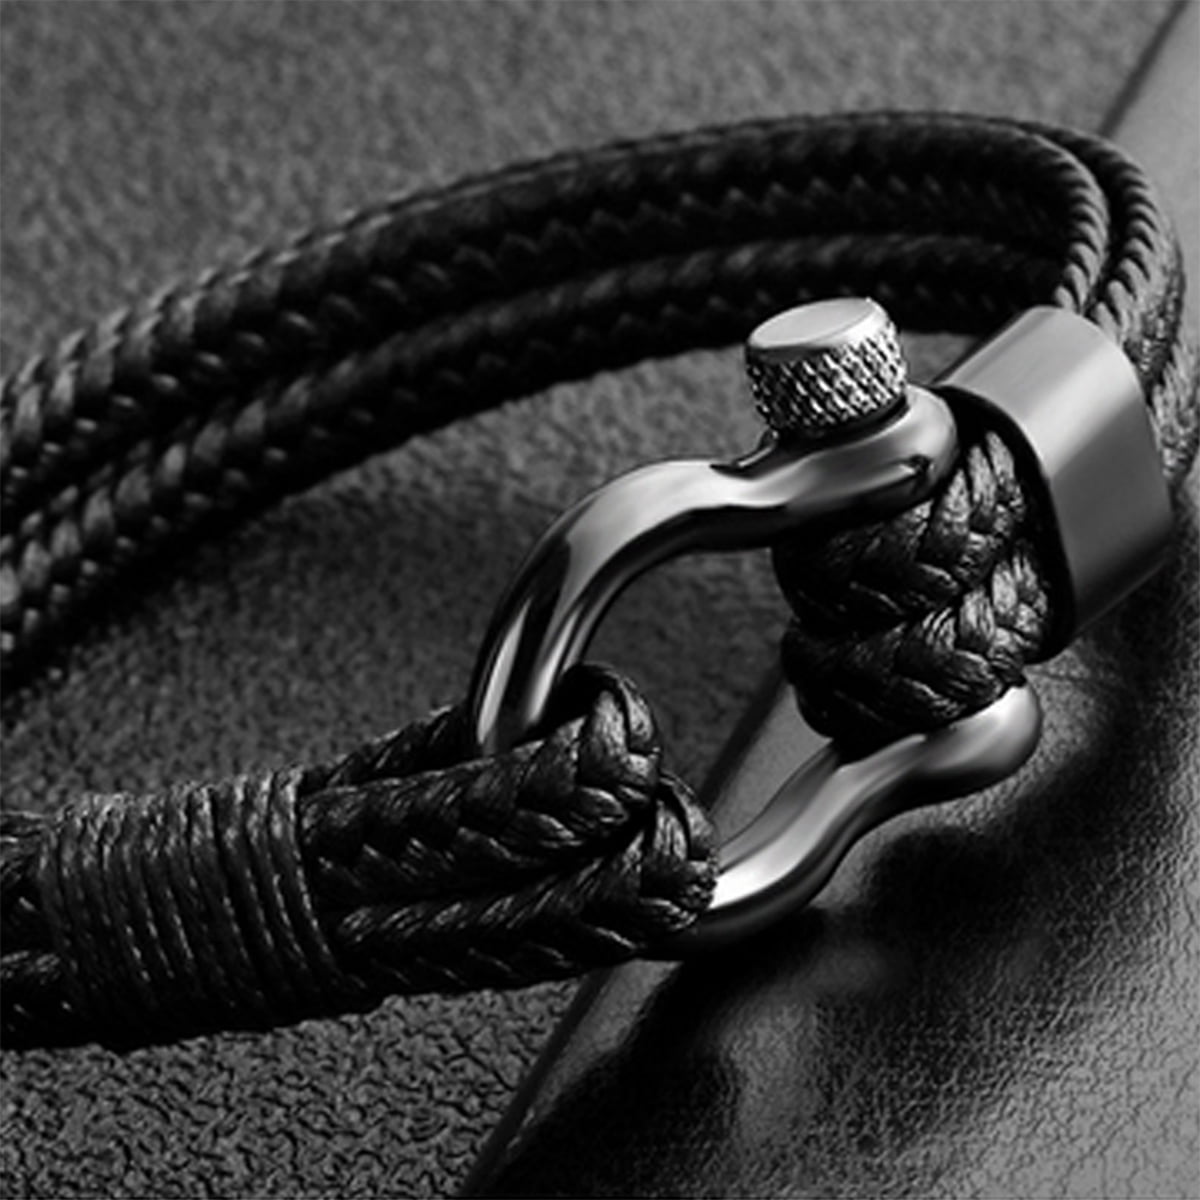 Multilayer Braided Design Stainless Steel Leather Bracelet for Men, Bo –  Shining Jewel